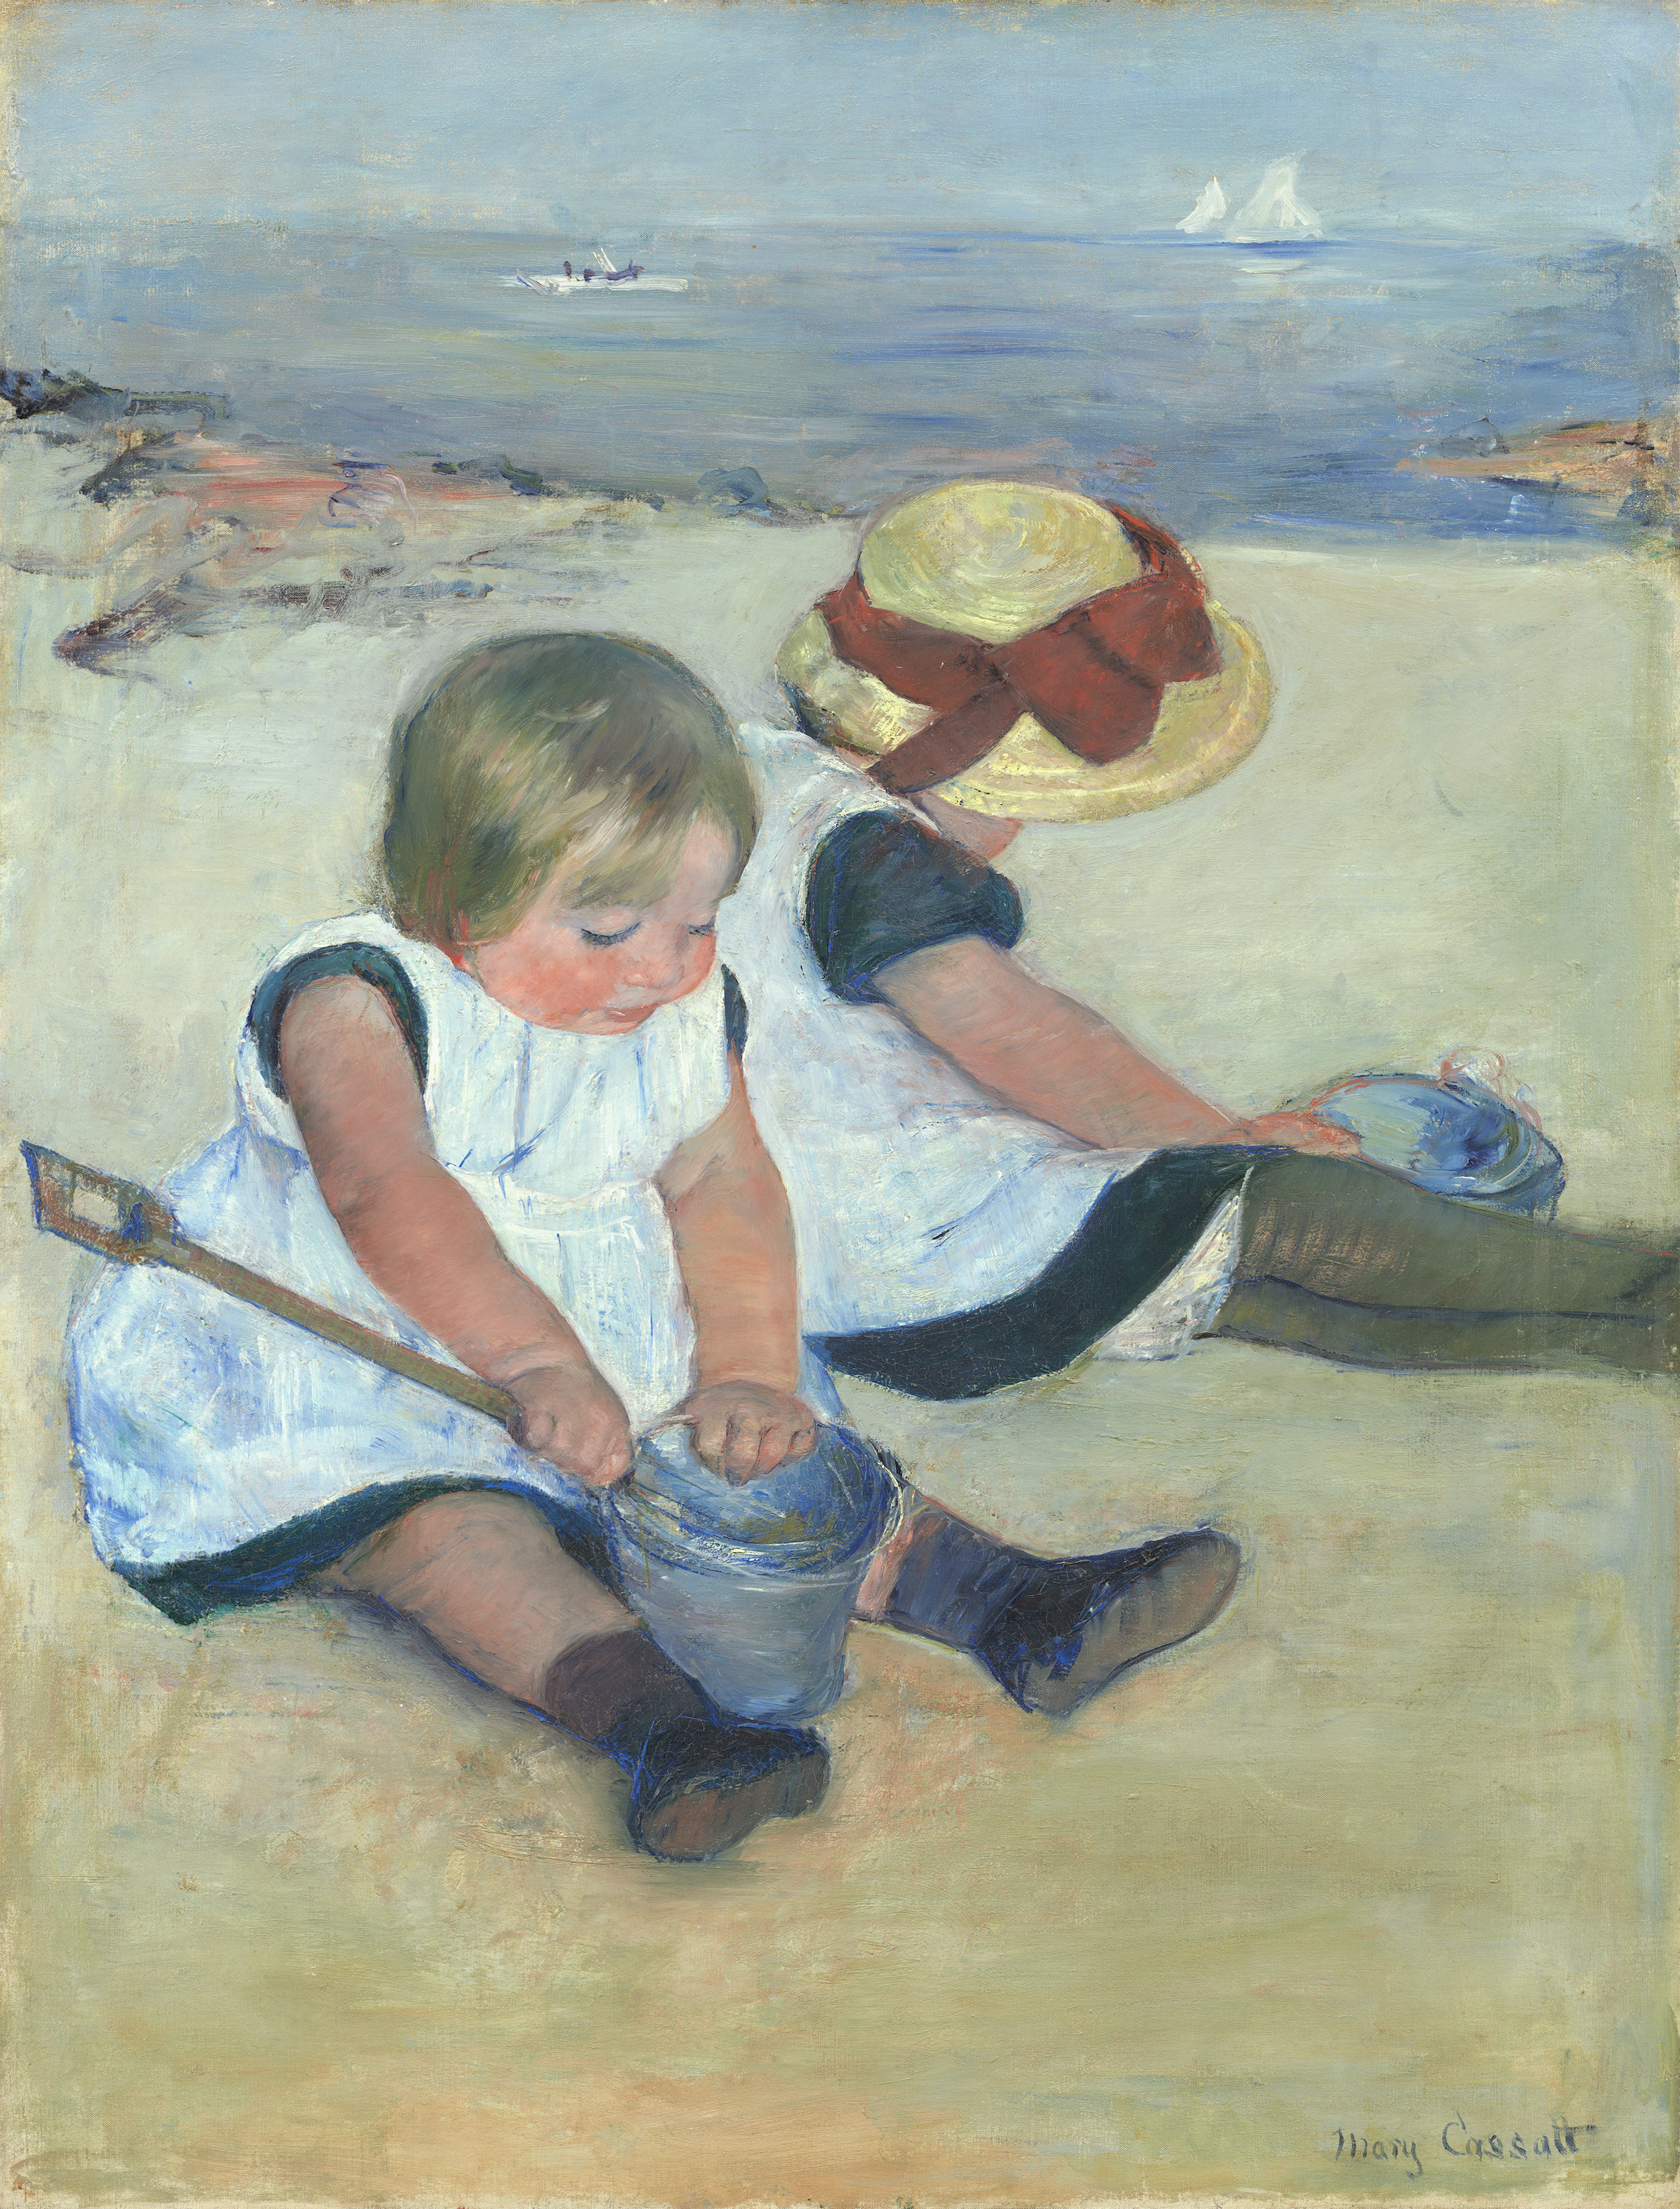 समुद्र तट पर खेलते बच्चे by Mary Cassatt - 1884 - 97.4 x 74.2 cm 